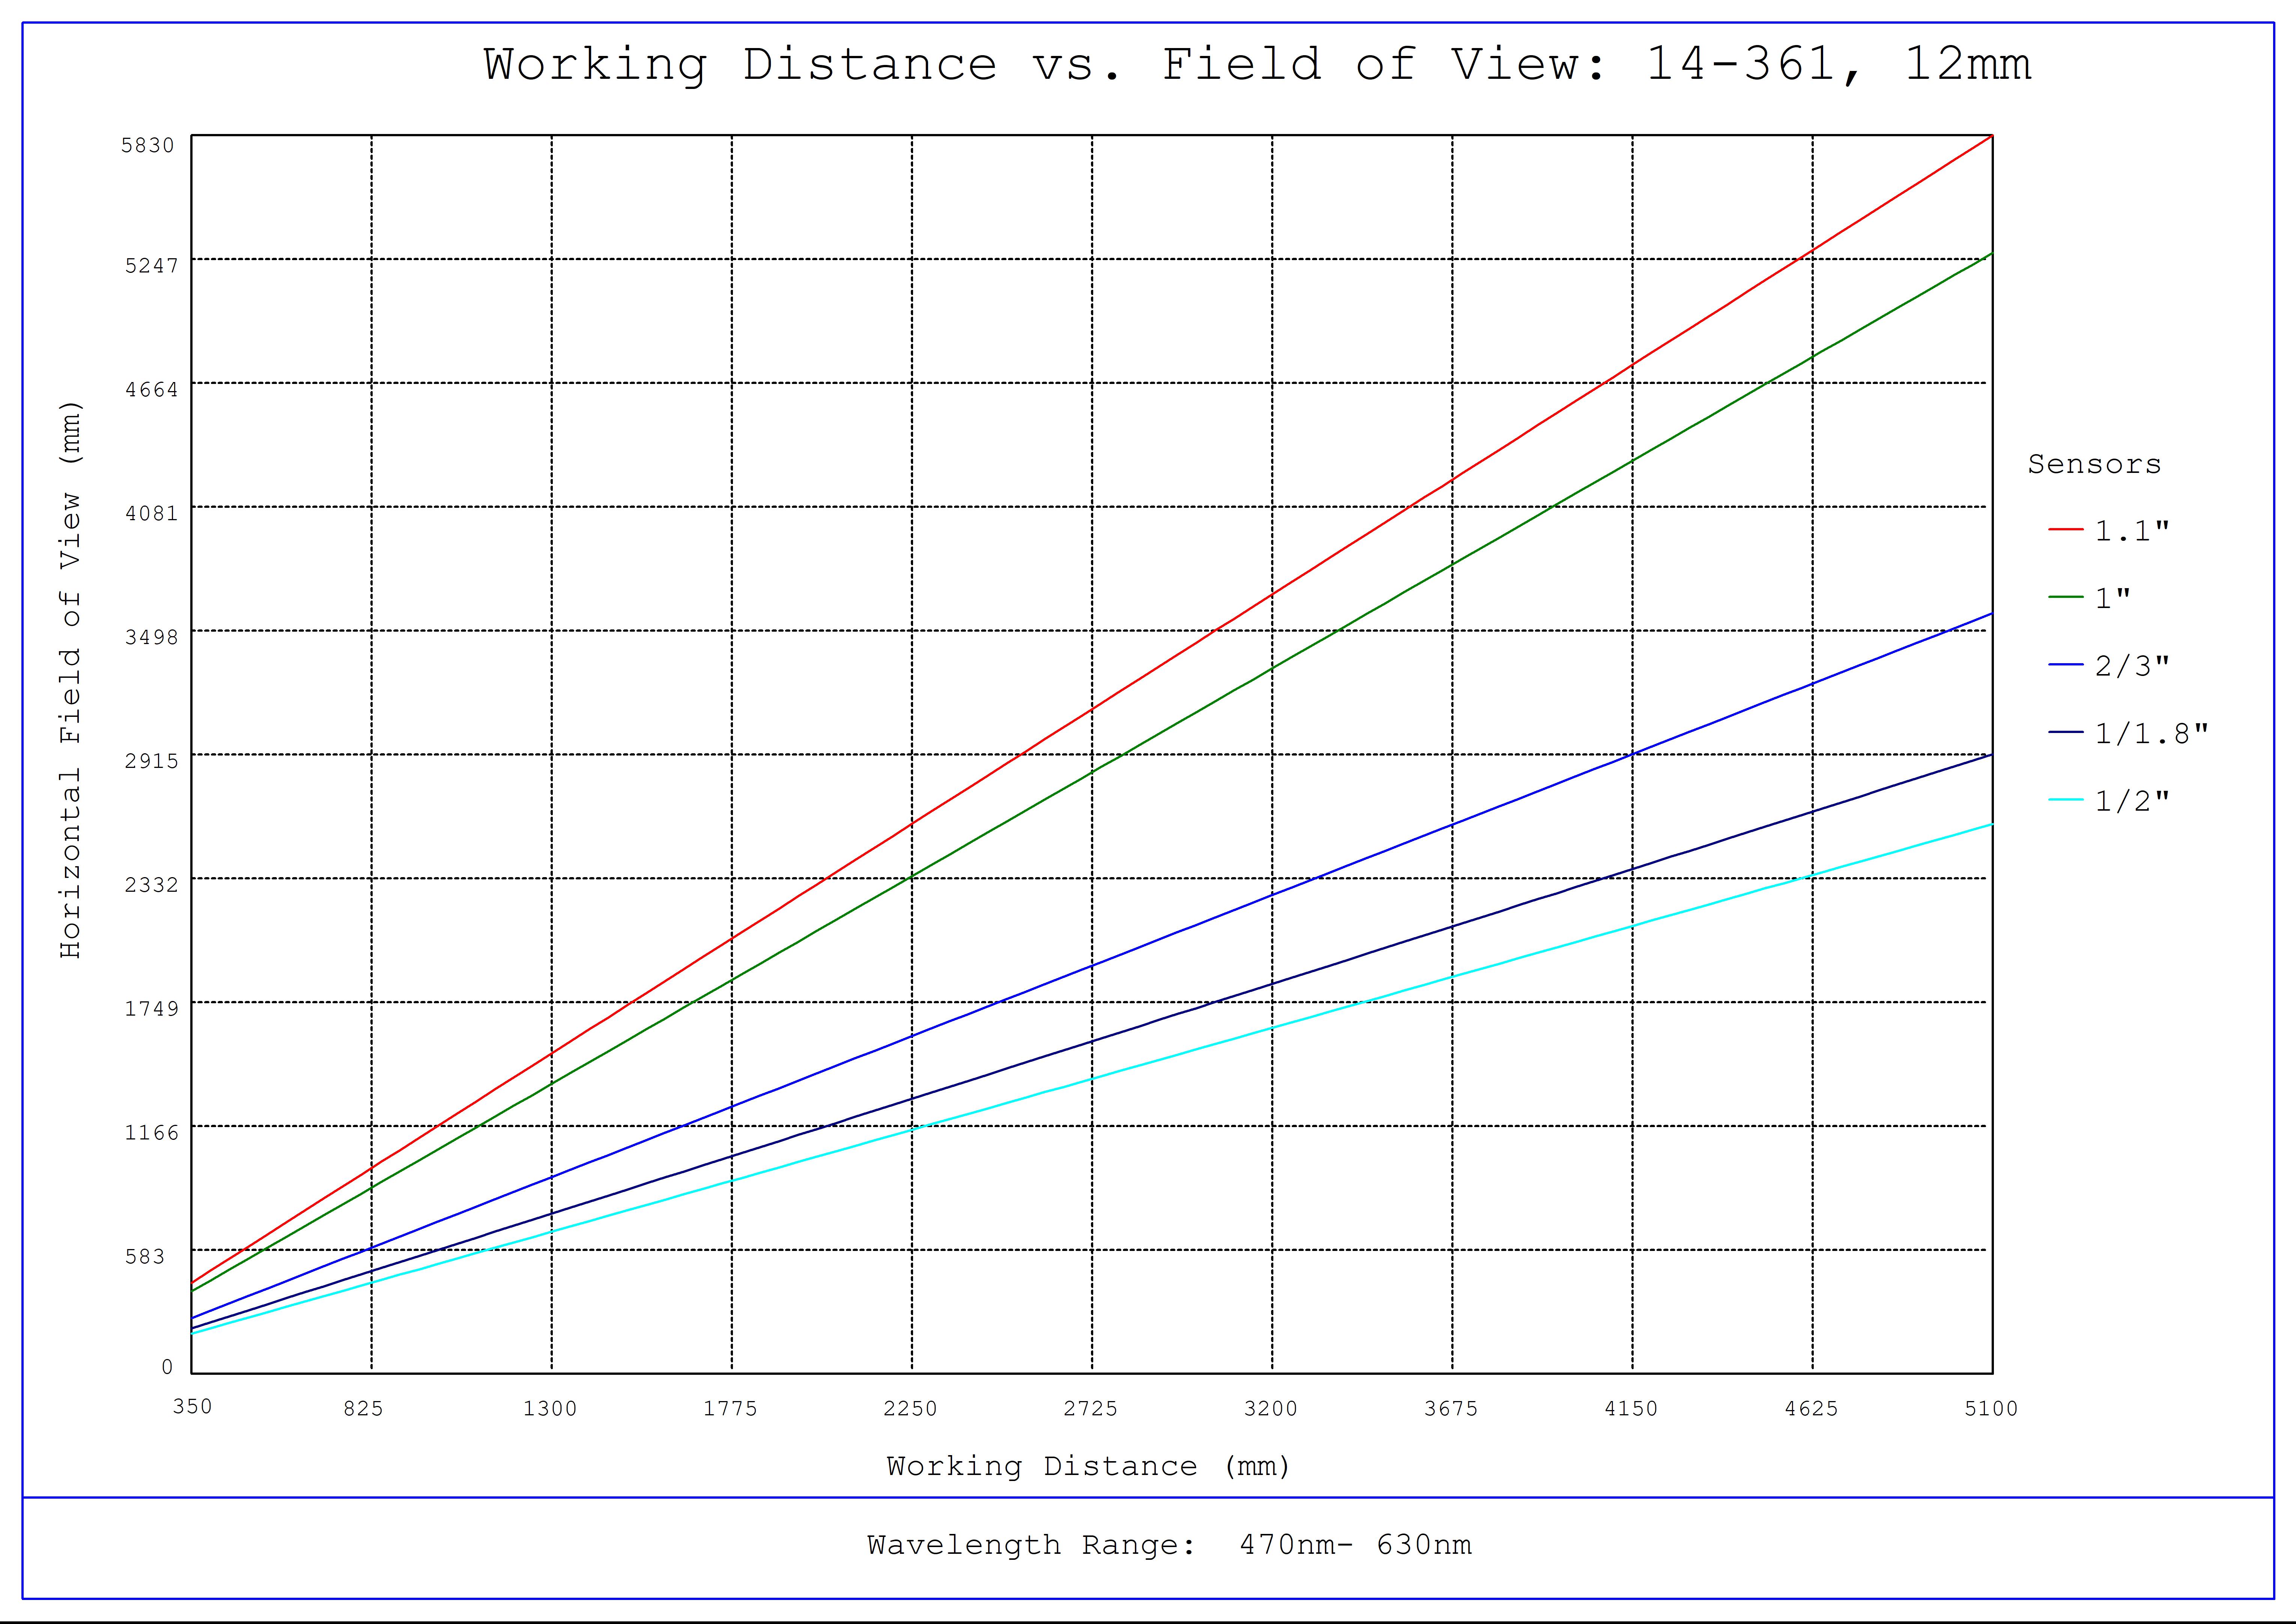 #14-361, 12mm LT Series Fixed Focal Length Lens, Working Distance versus Field of View Plot